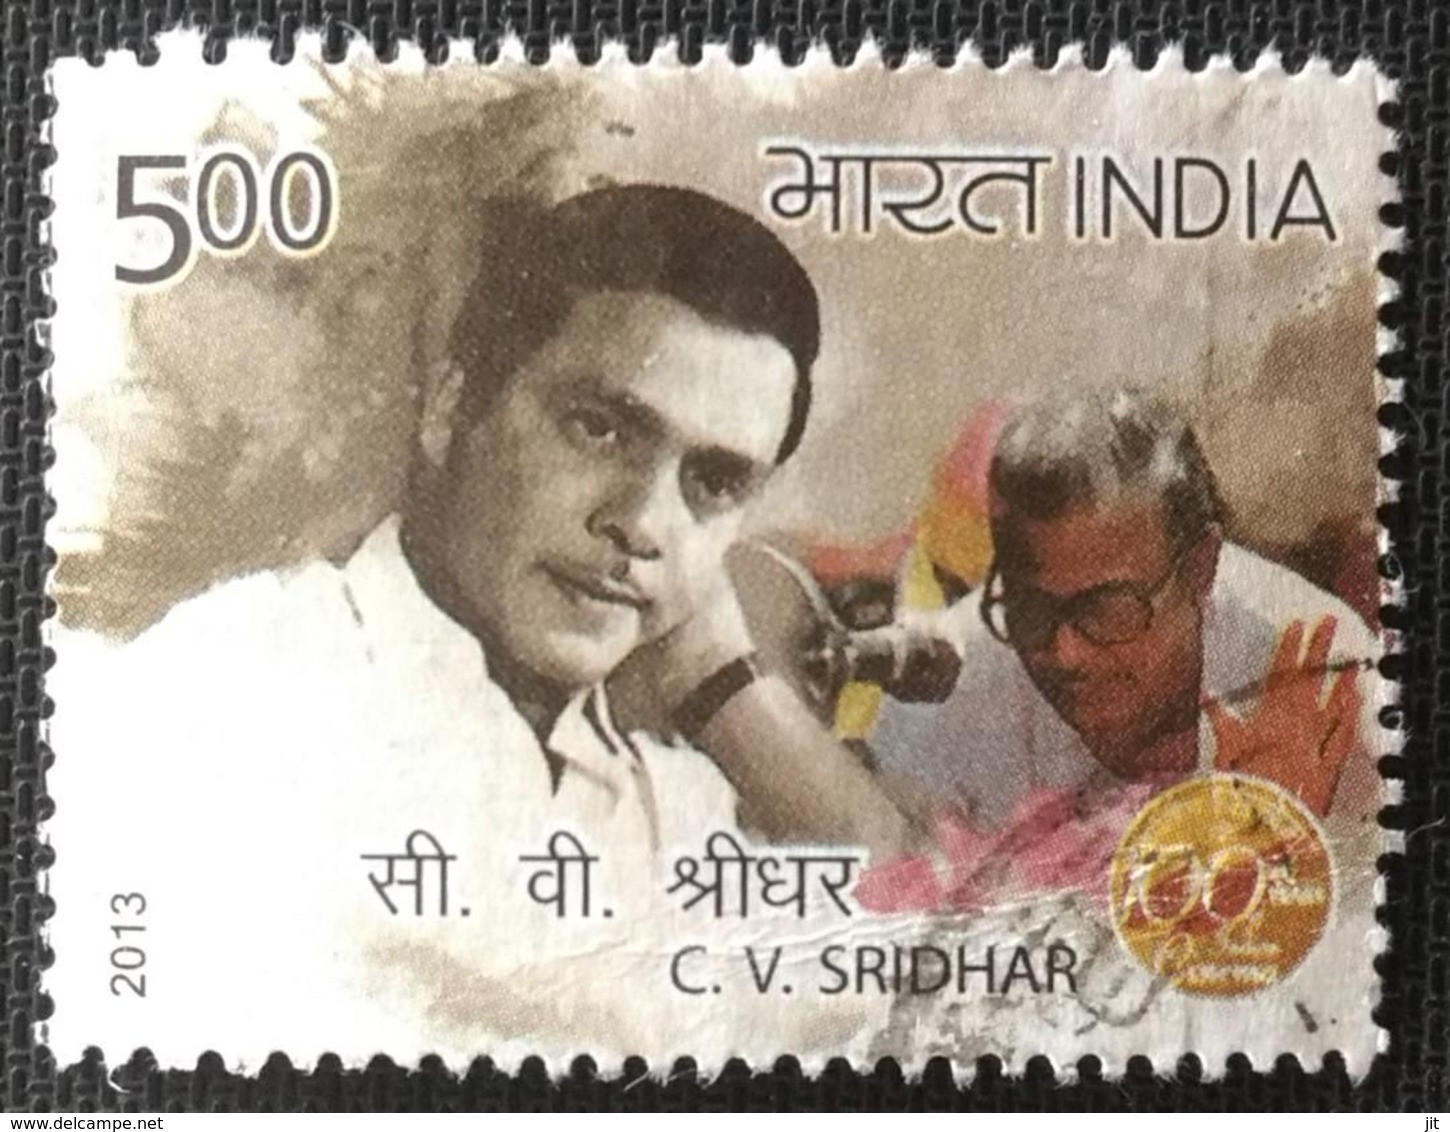 INDIA 2013 USED STAMP 100 YEARS OF INDIAN CINEMA (C.V.SRIDHAR) - Gebraucht